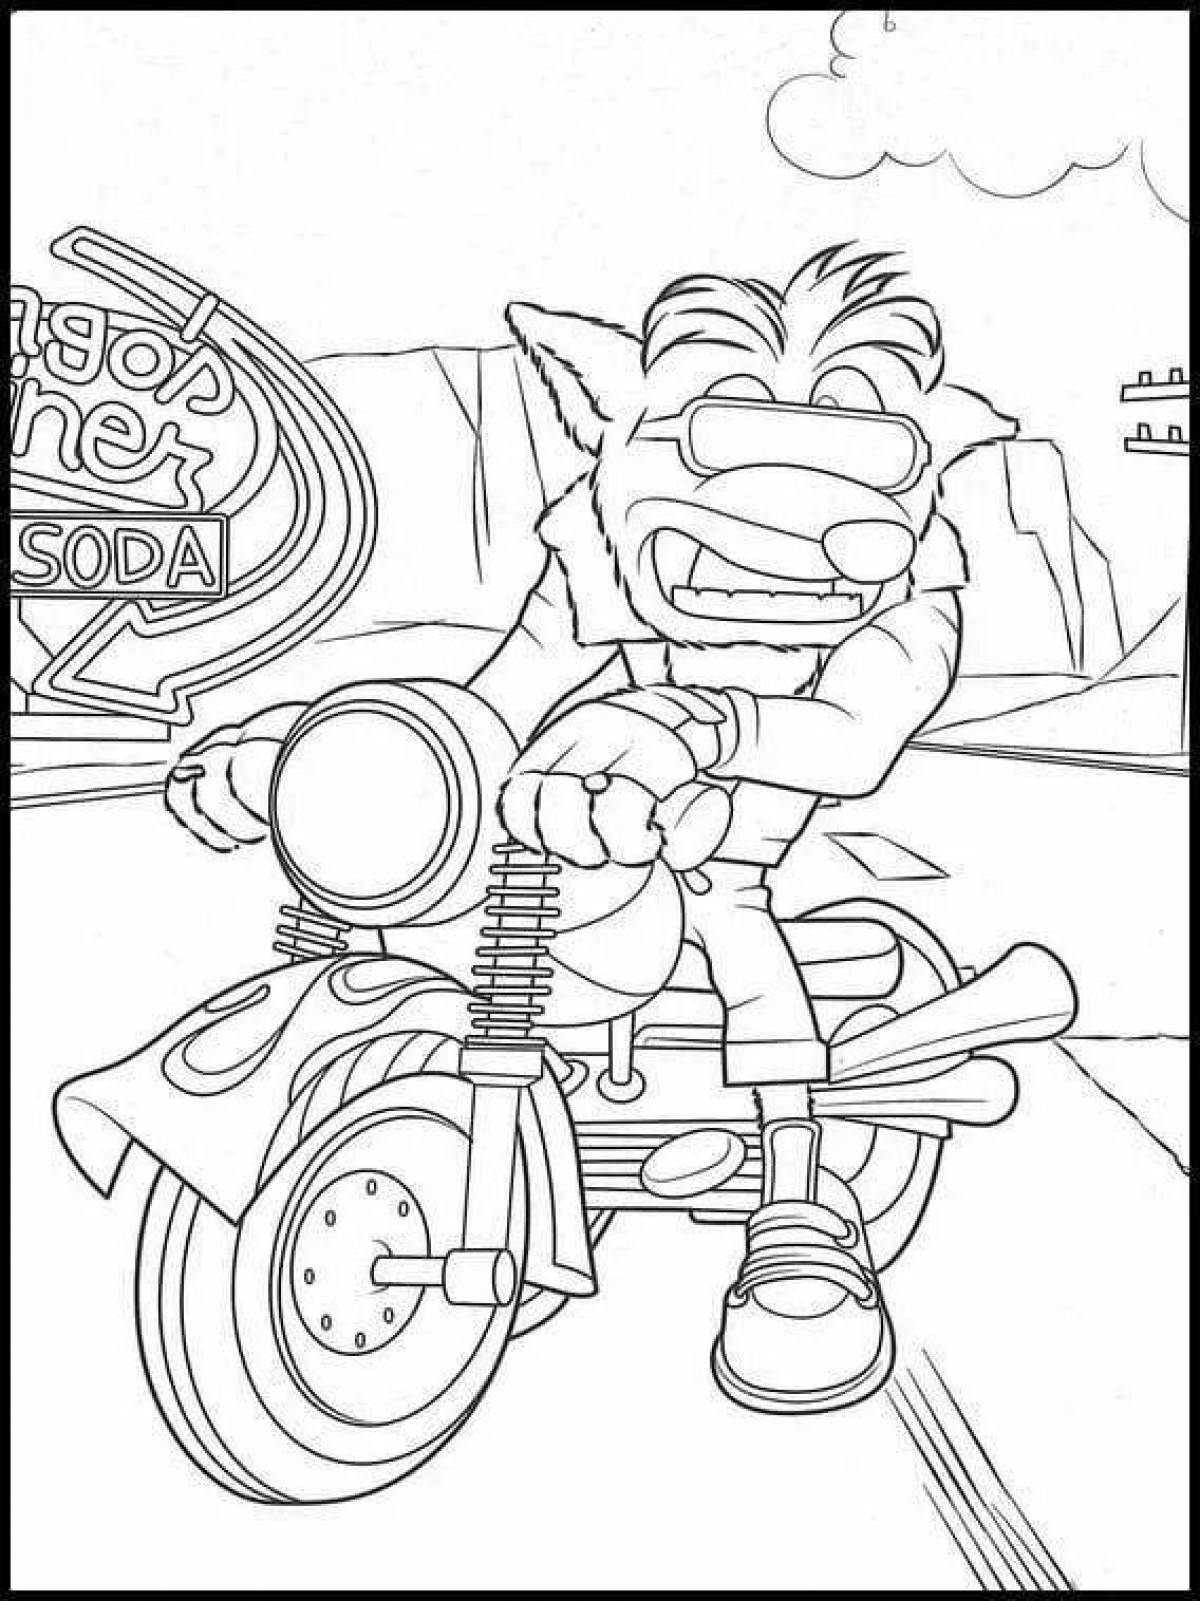 Coloring page of crash bandicoot